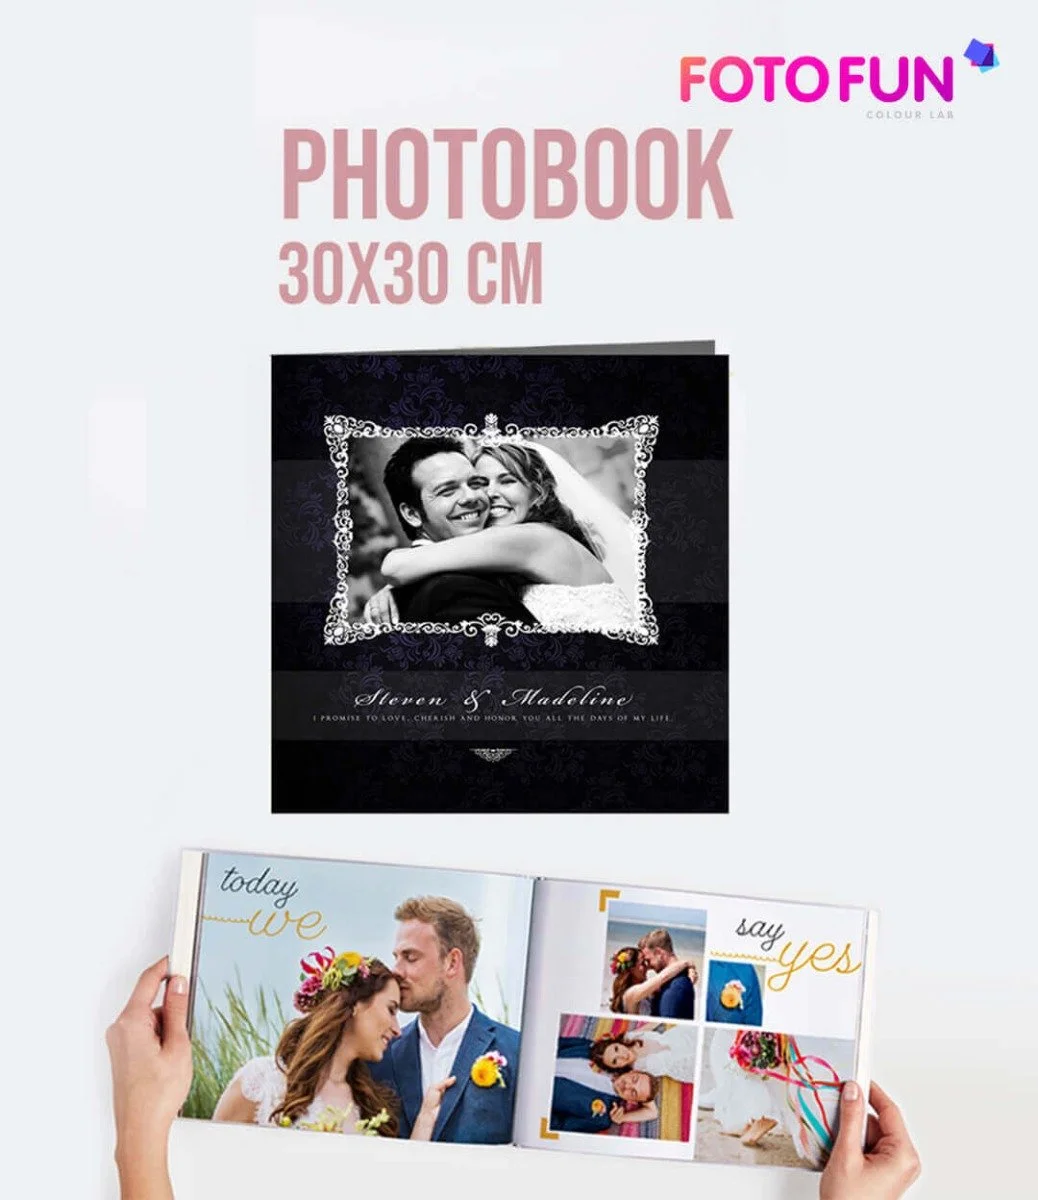 Photobook 30x30cm by Foto Fun